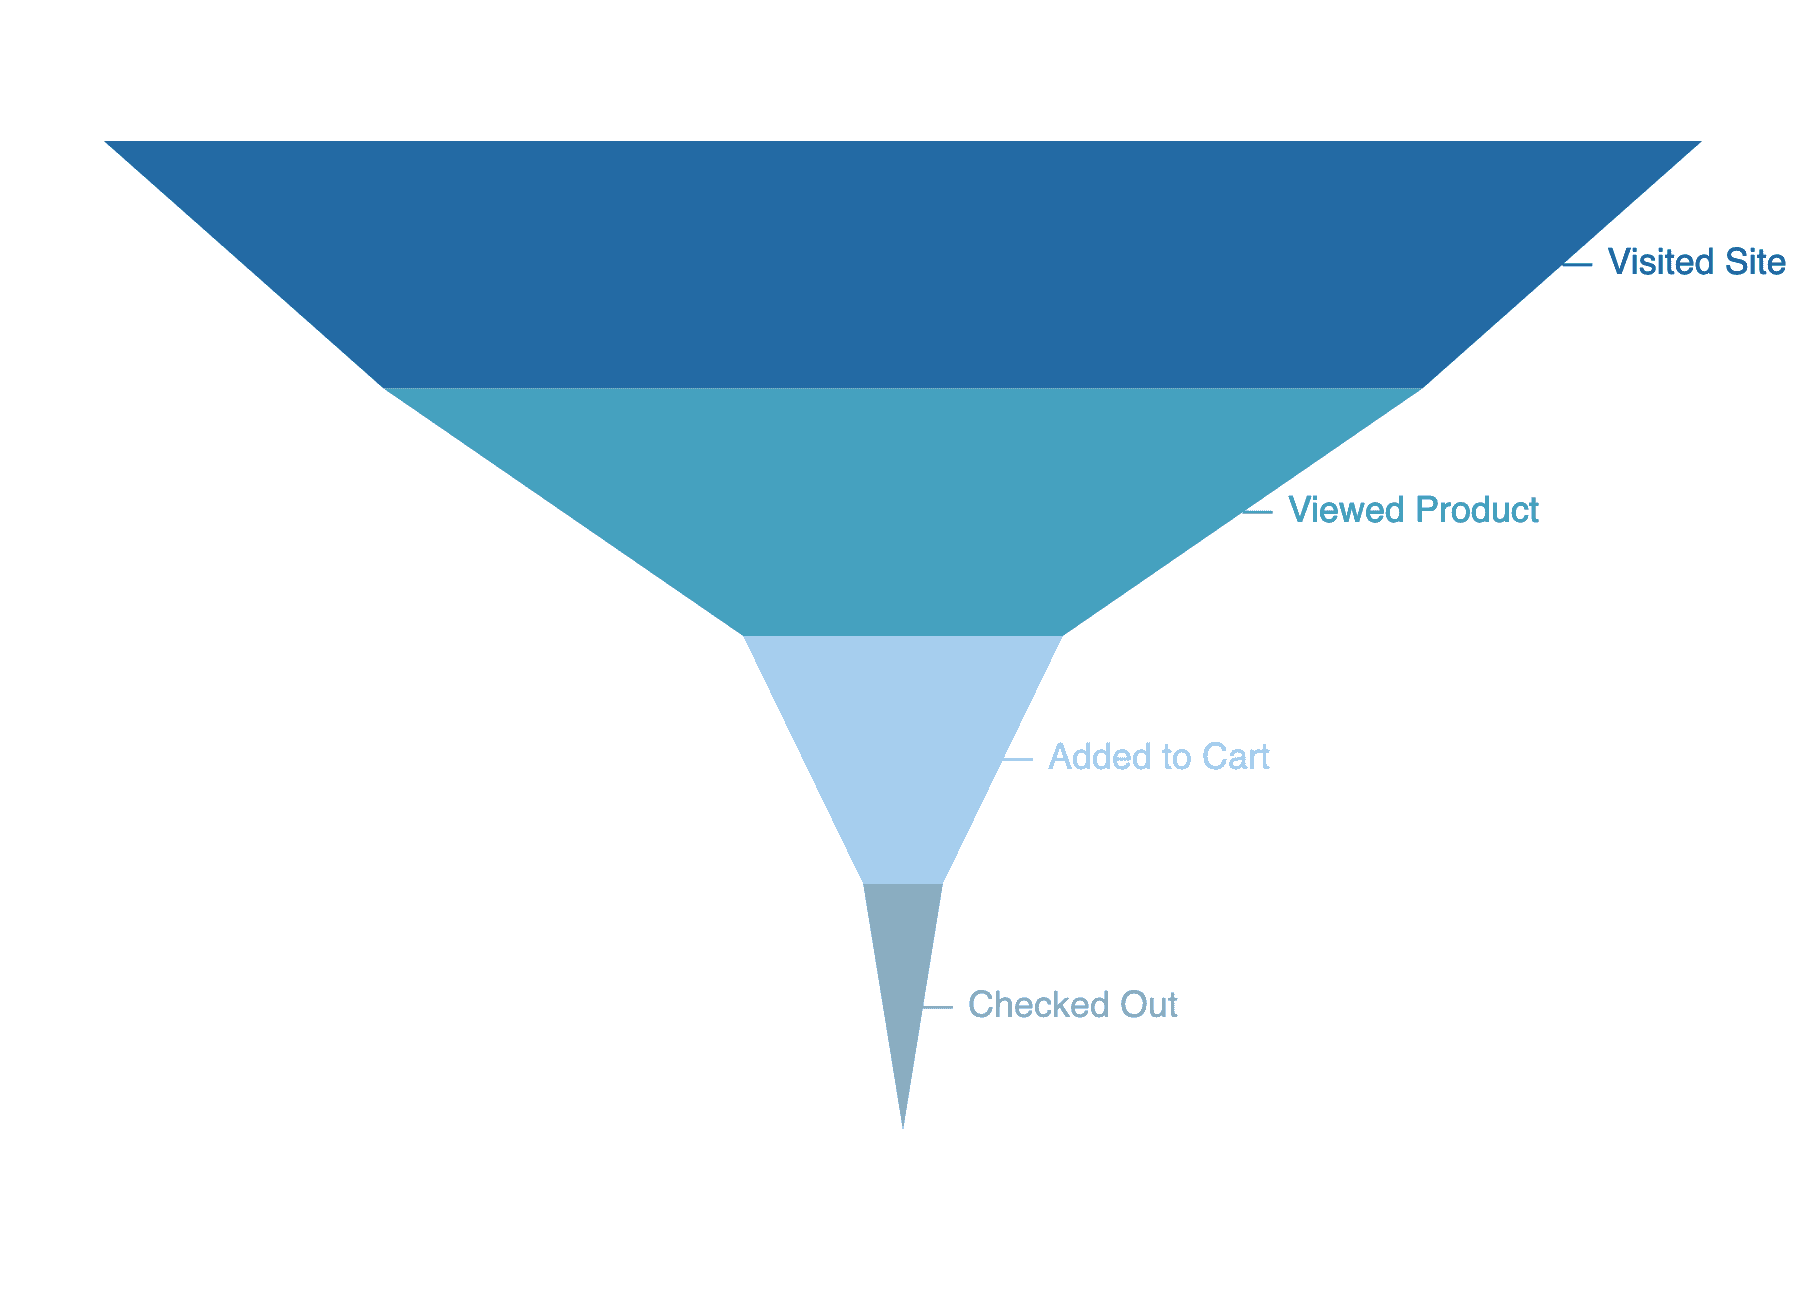 Funnel Chart